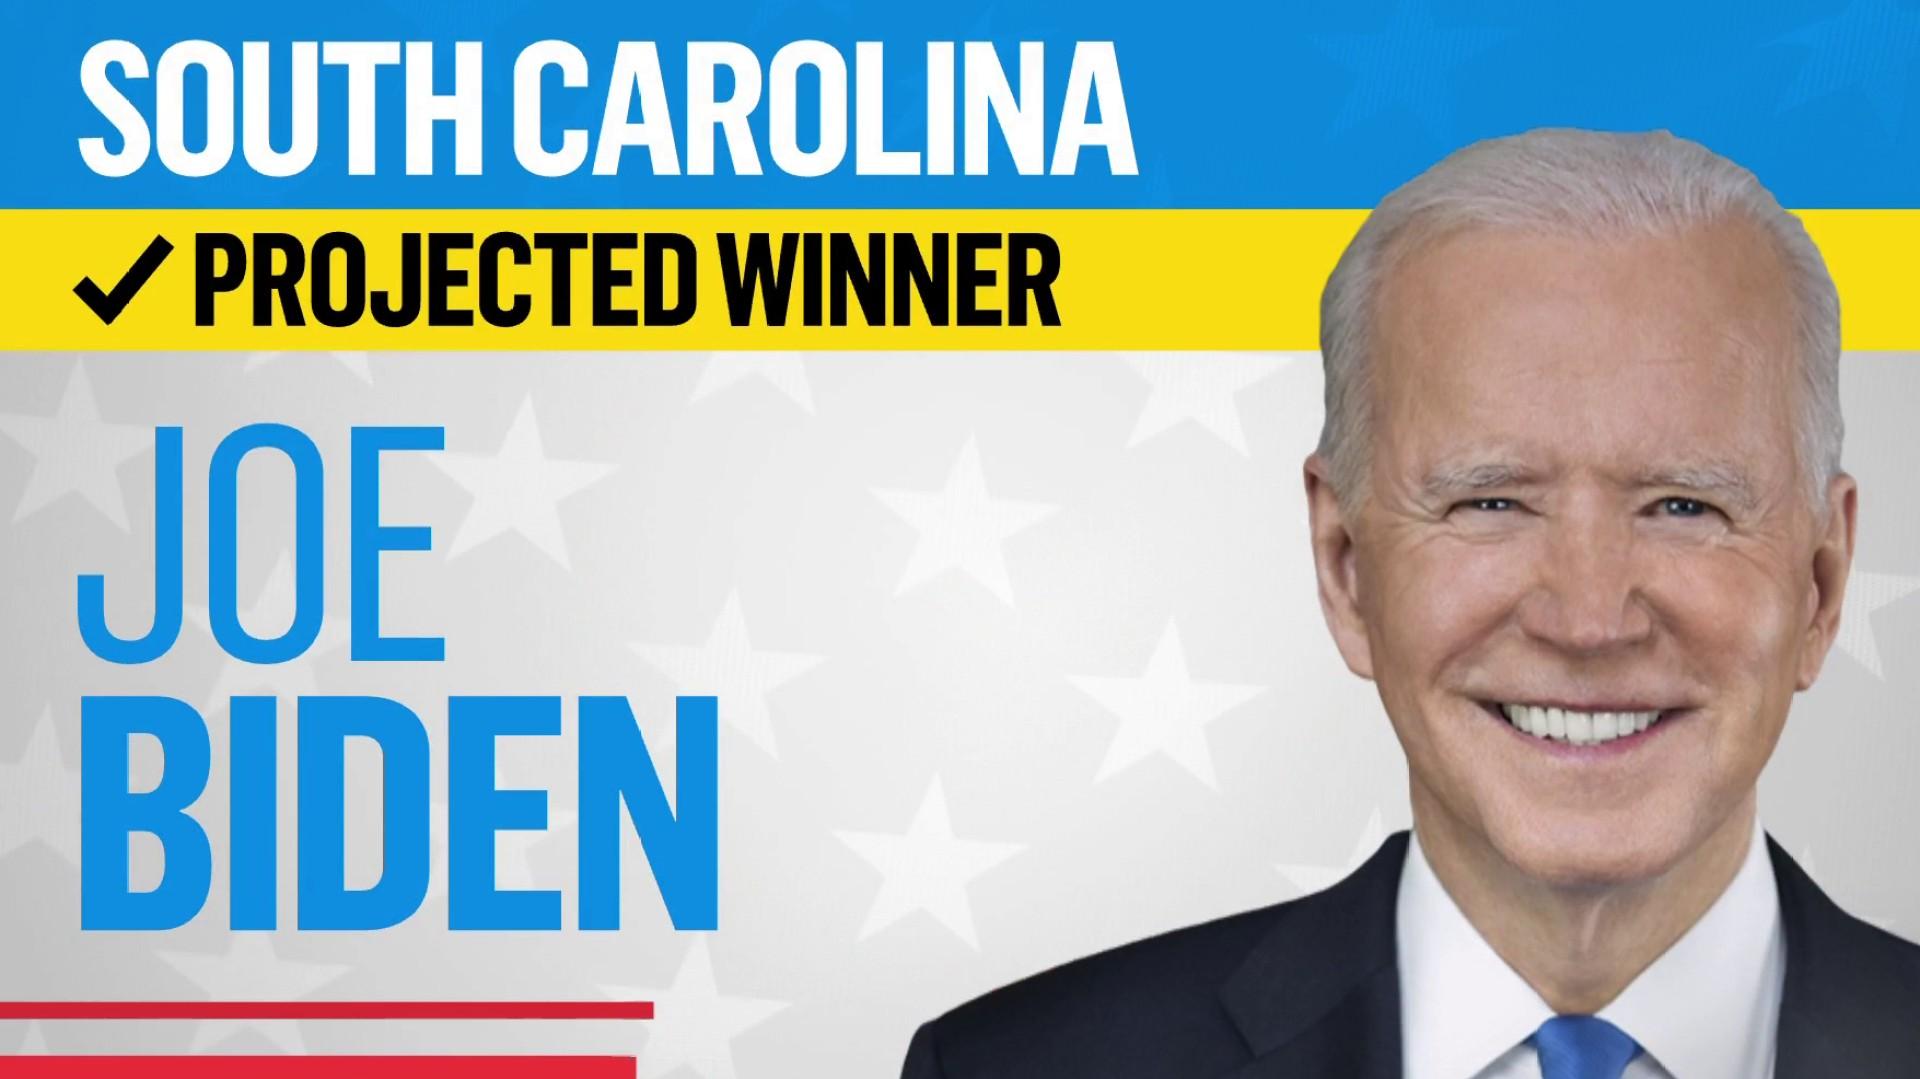 NBC News projects President Biden wins South Carolina primary